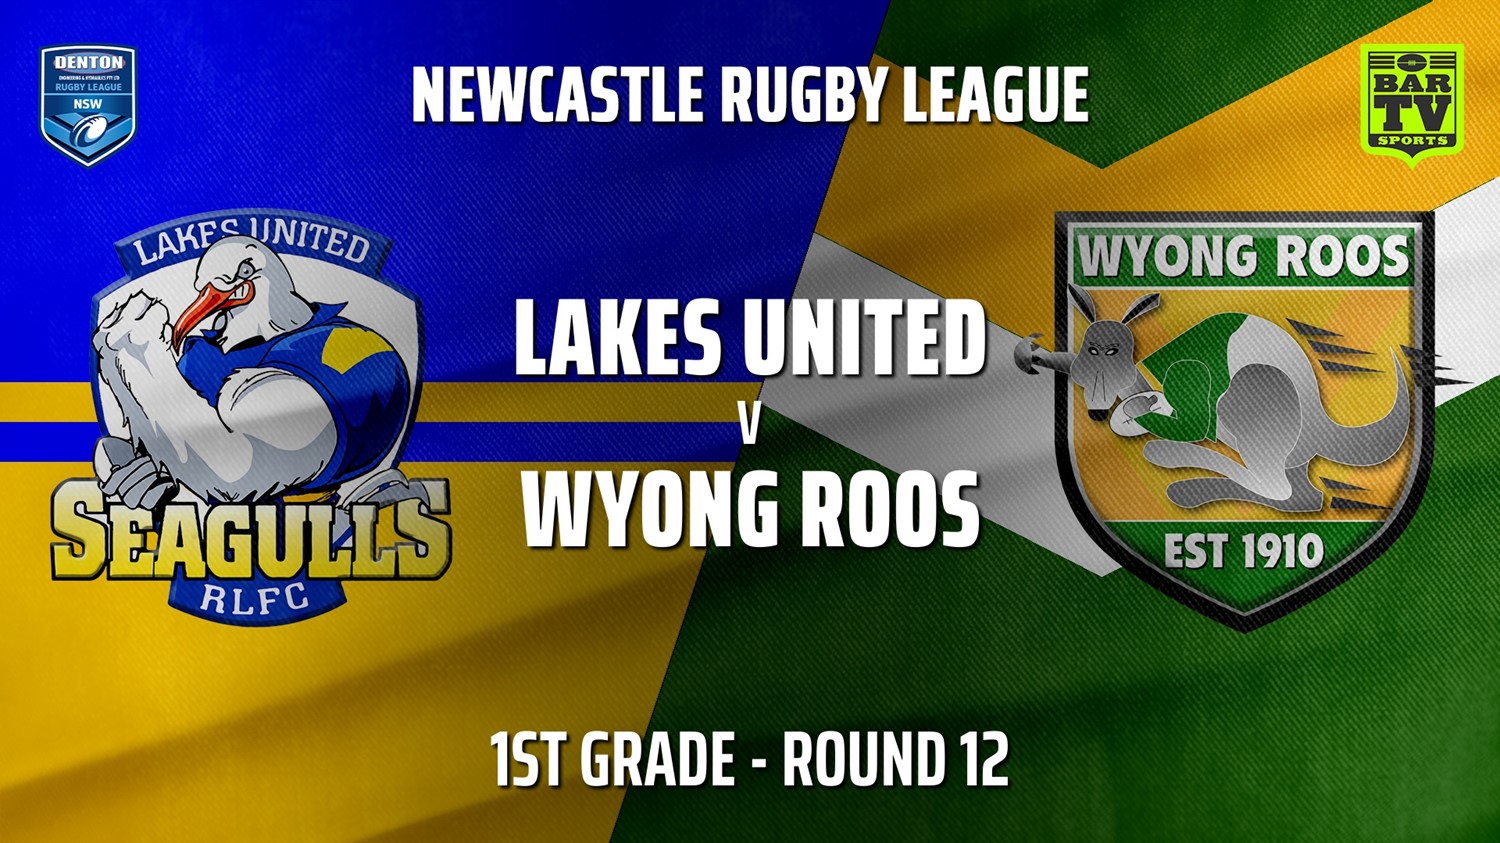 210620-Newcastle Round 12 - 1st Grade - Lakes United v Wyong Roos Minigame Slate Image